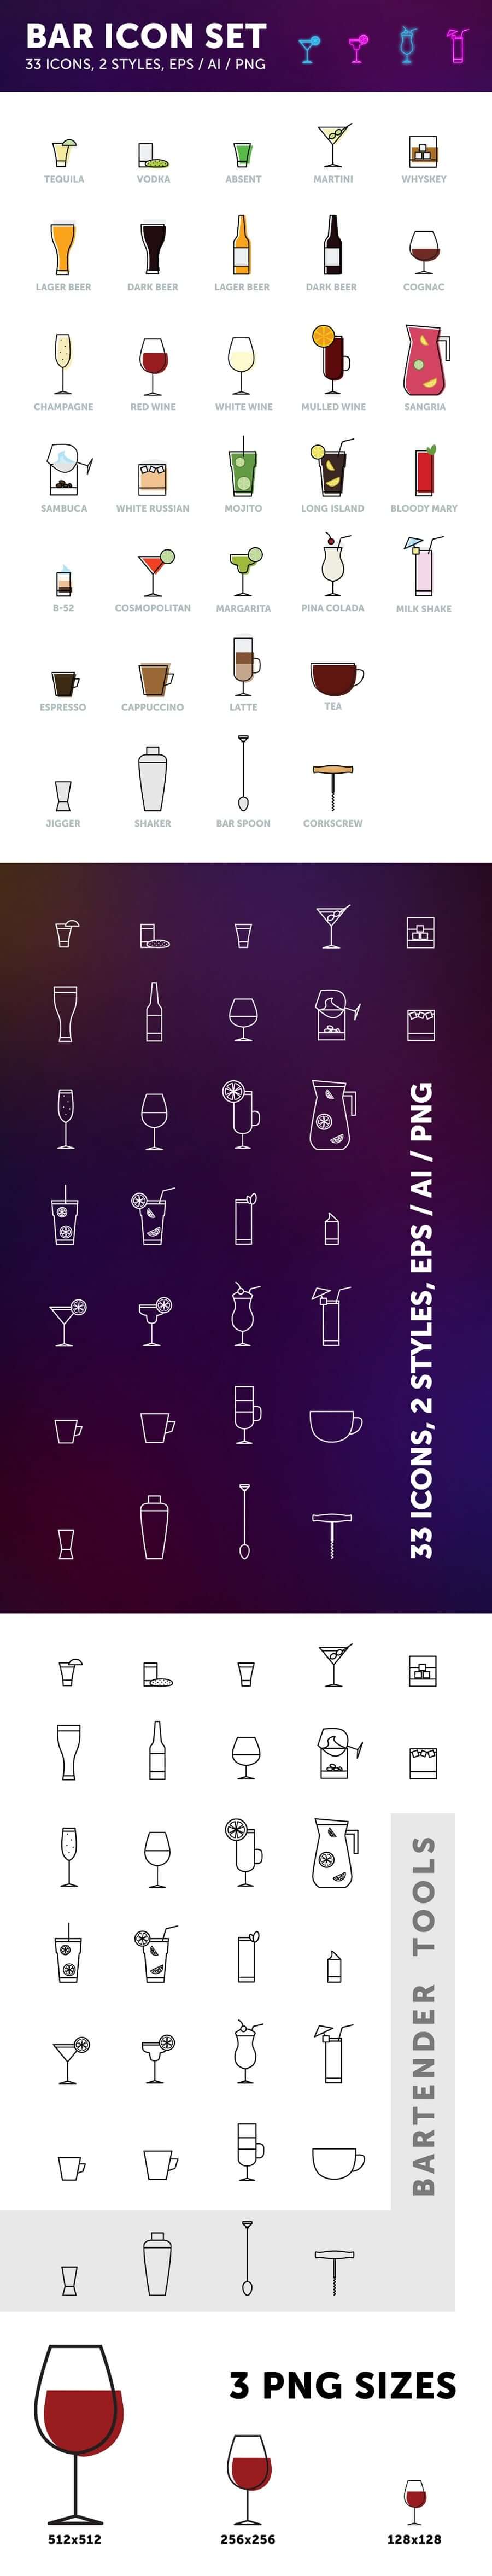 icones-bar-cocktails